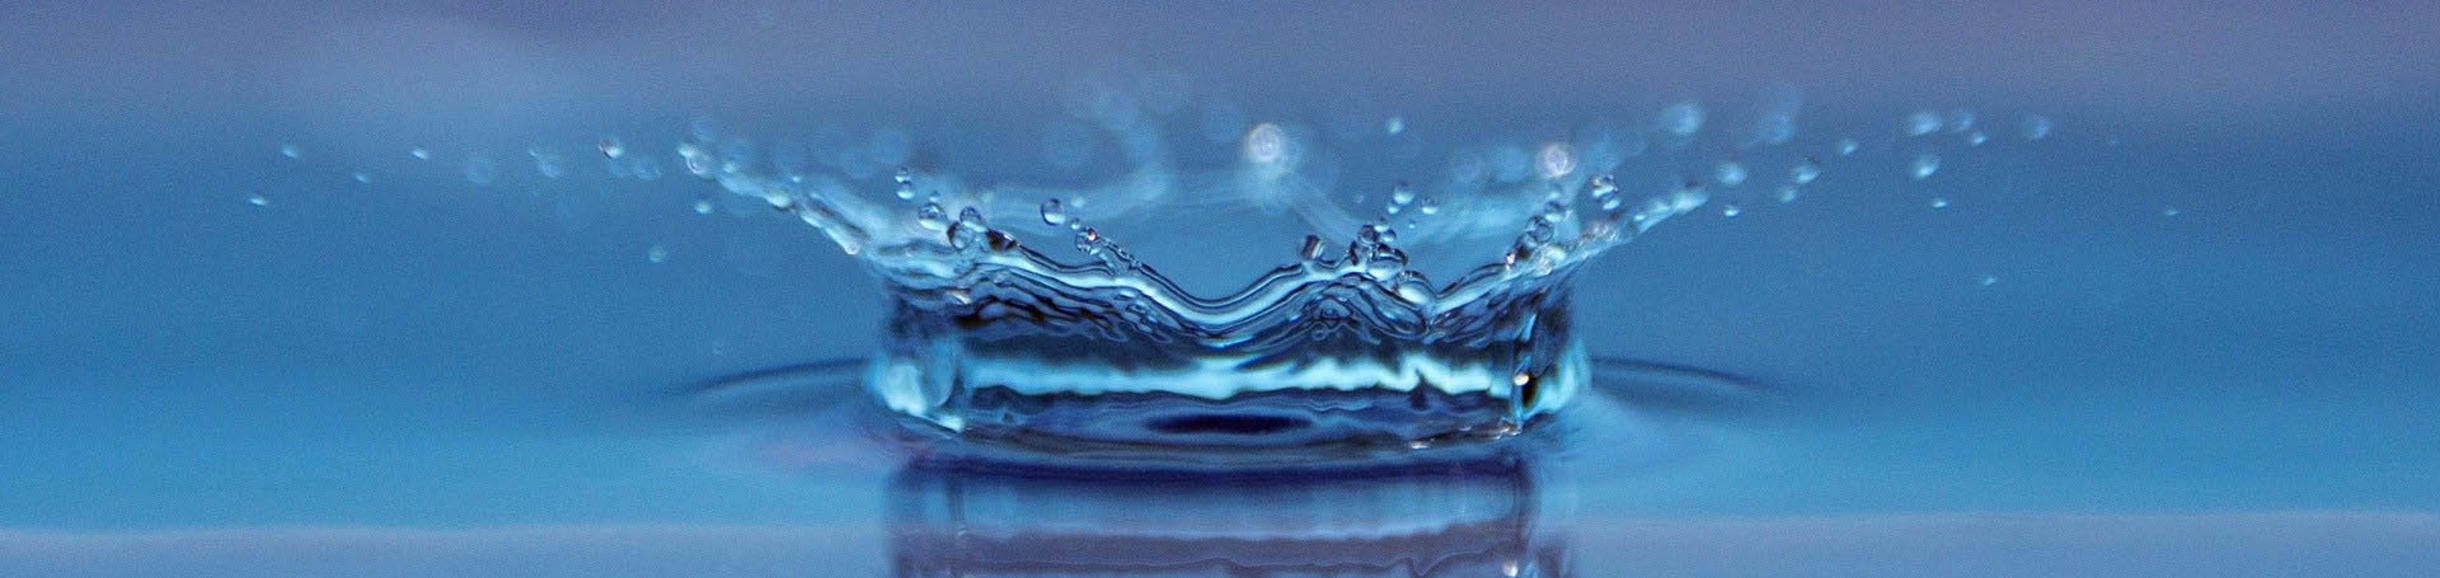 Drop of water (c) pixabay.com